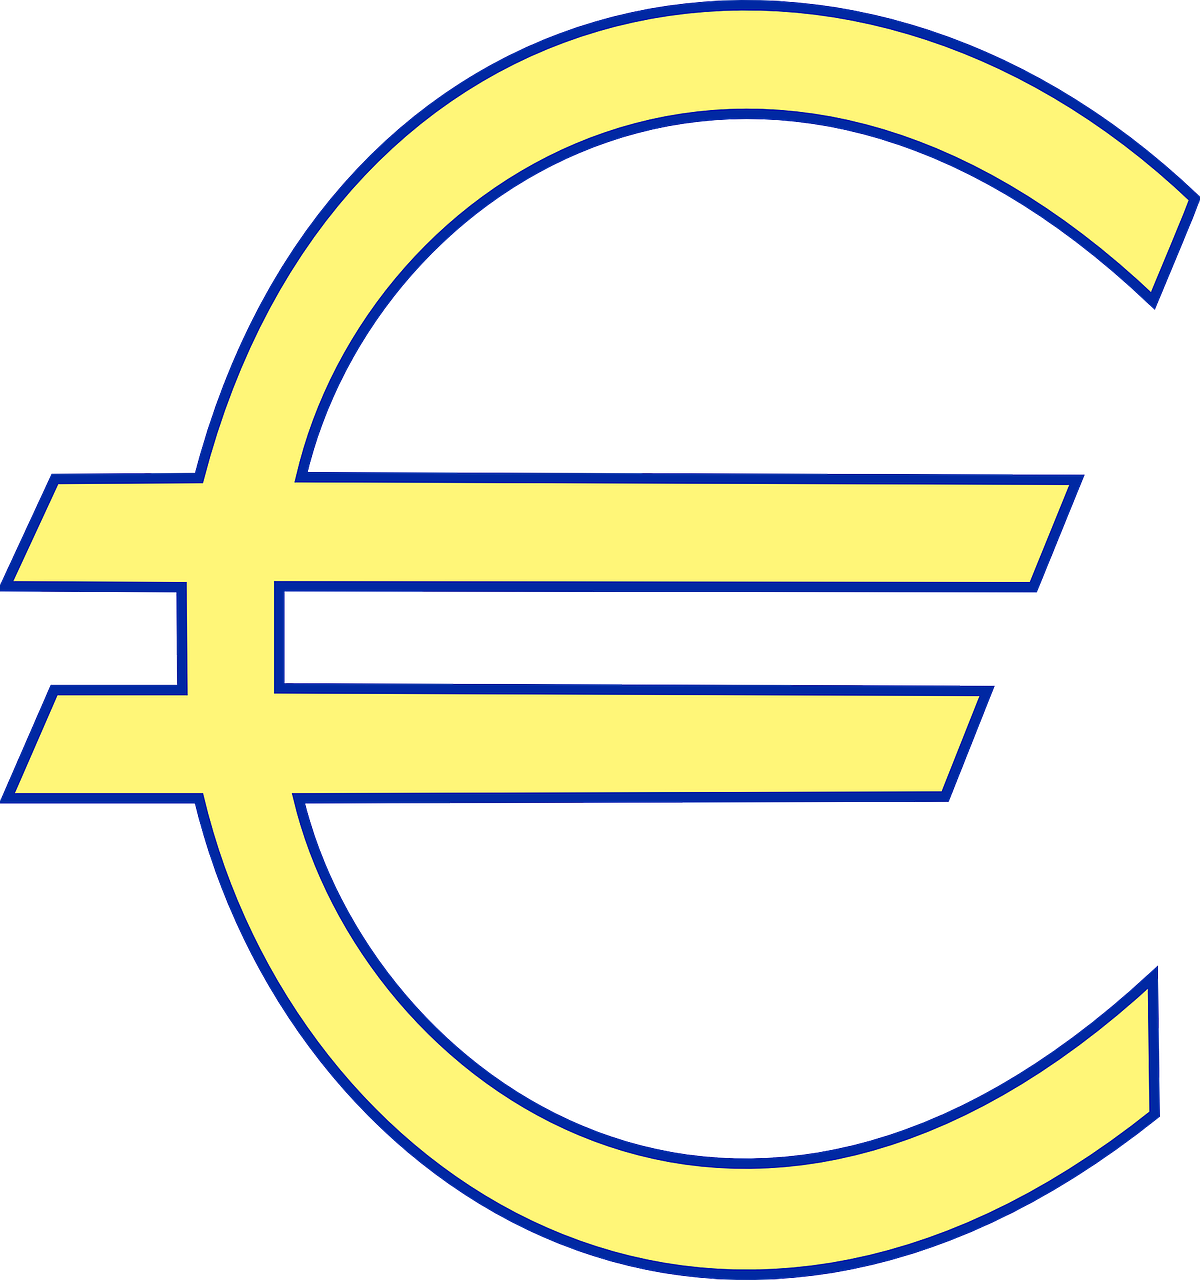 Euras, Valiuta, Ženklas, Europietis, Pinigai, Euro Zona, Keistis, Turgus, Finansai, Simbolis